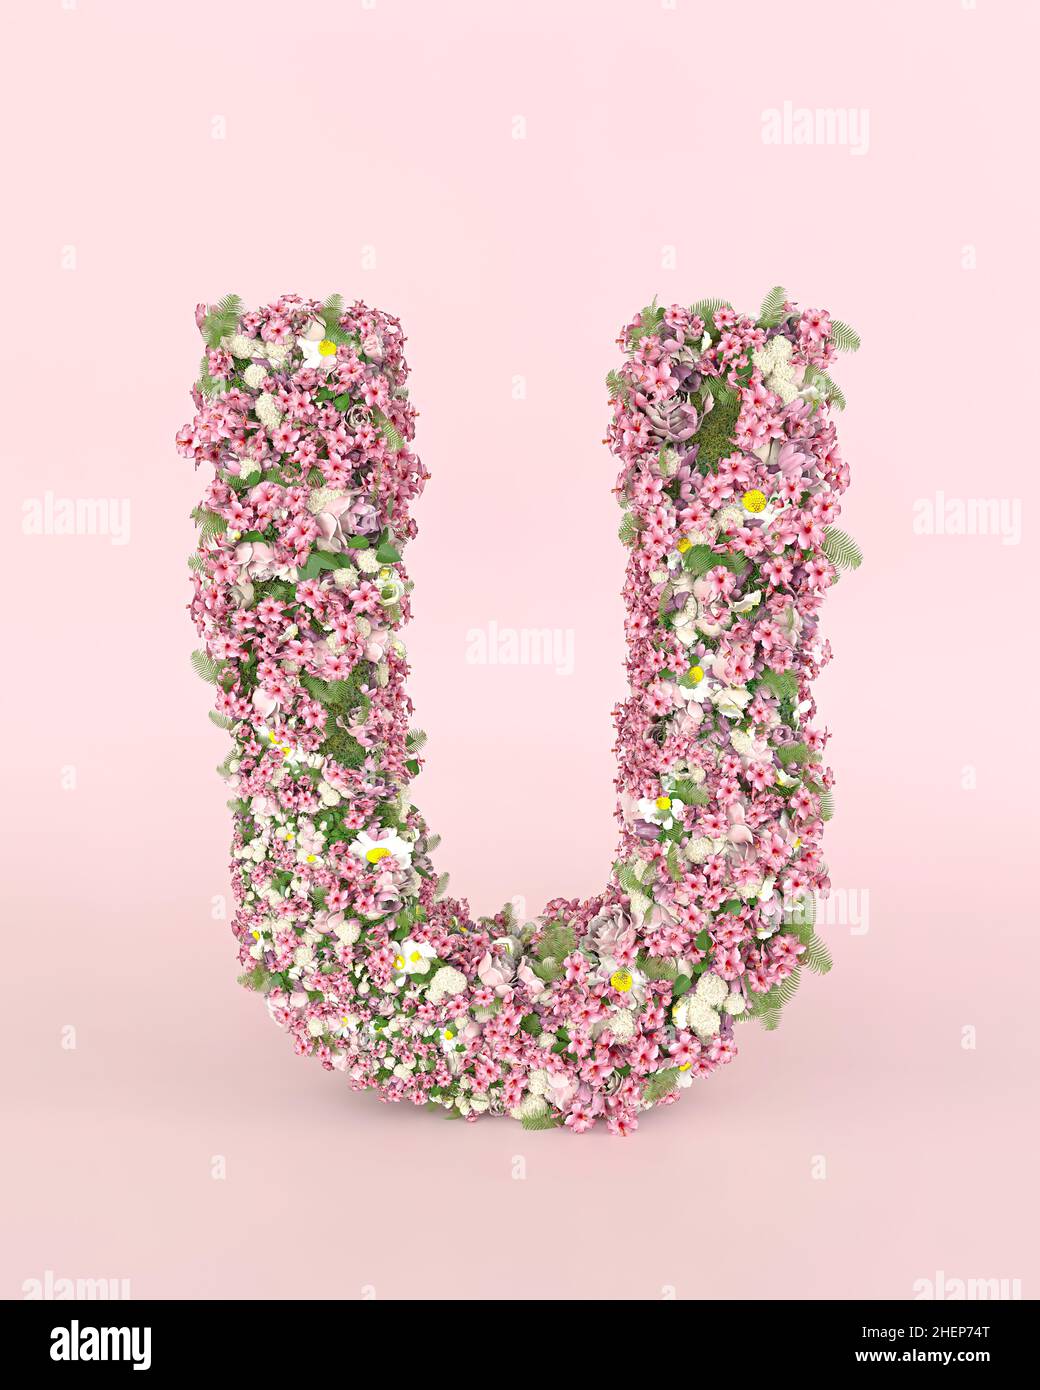 flowers alphabet letter u Stock Photo - Alamy